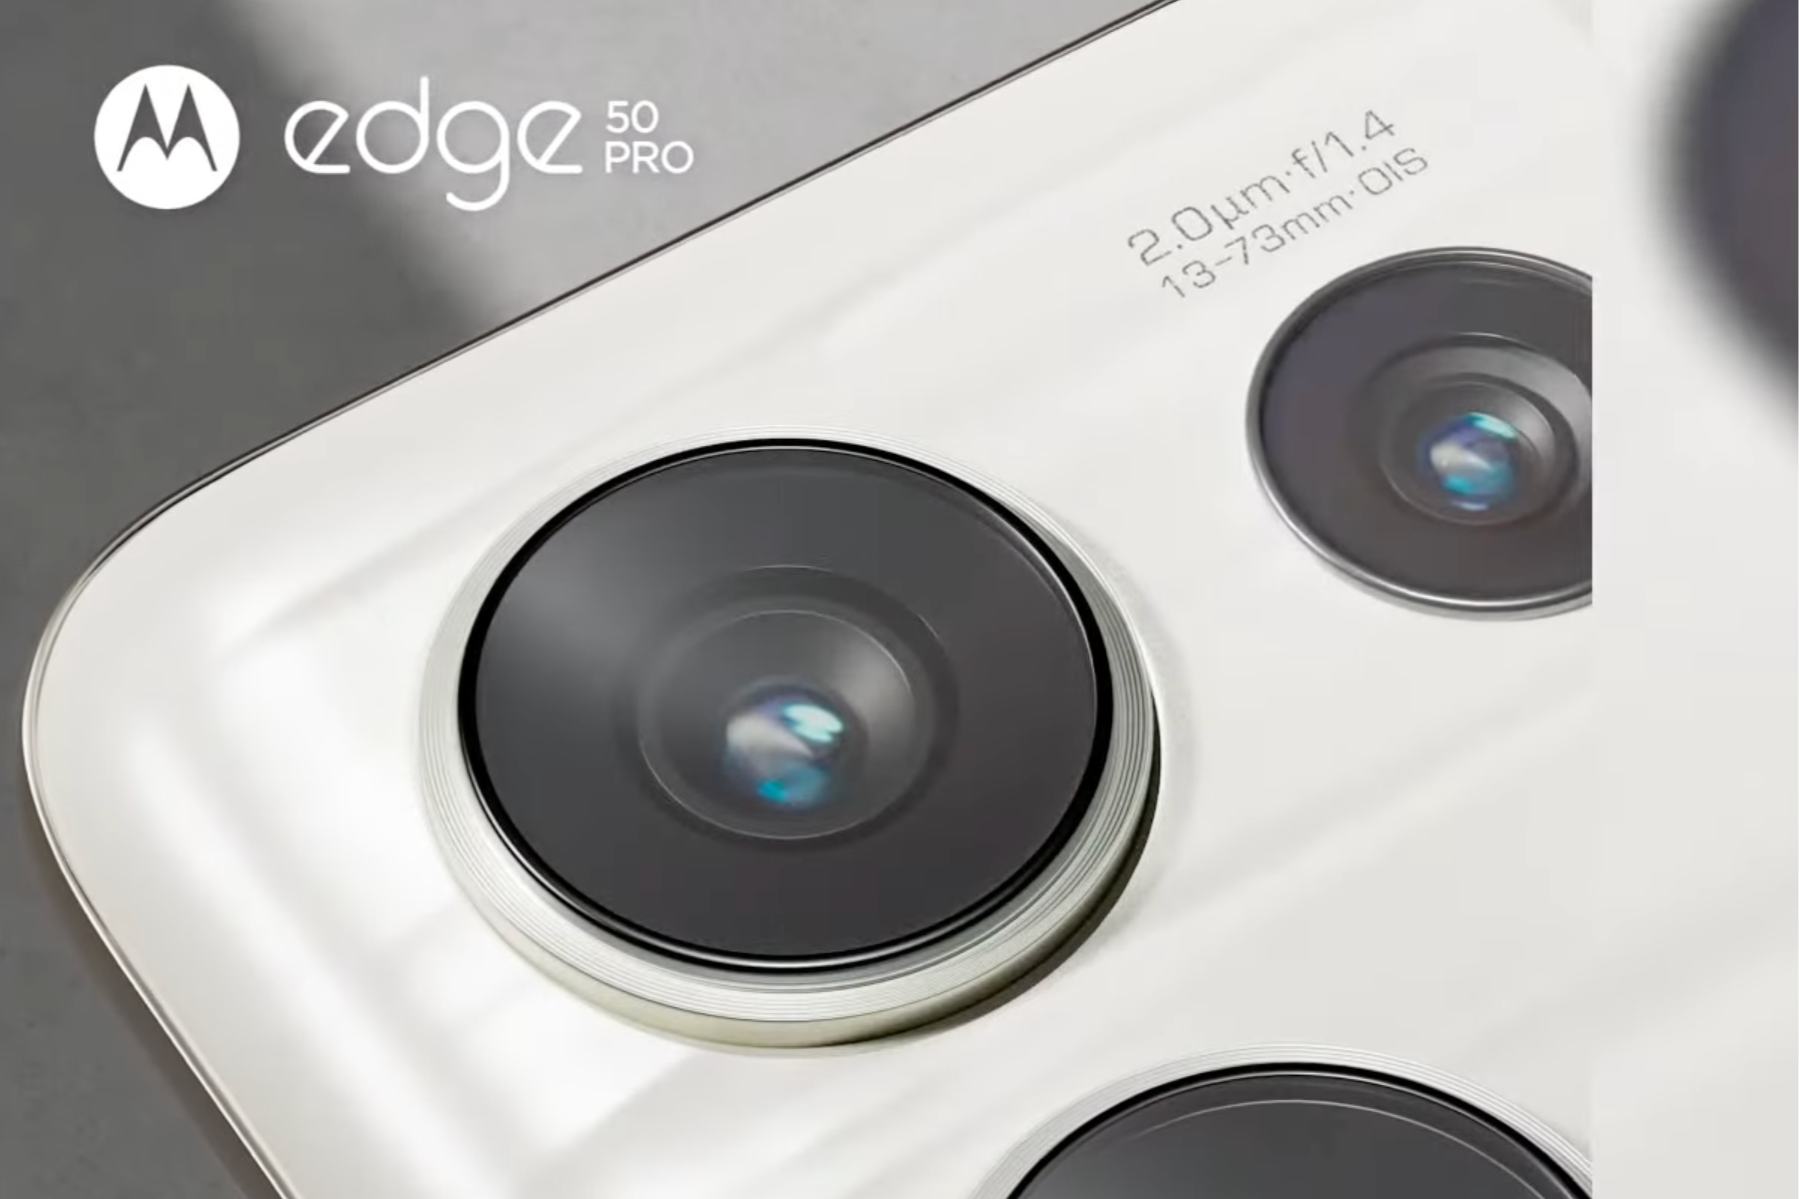 Motorola Edge 50 Pro unveiled: A camera-centric phone with AI smarts